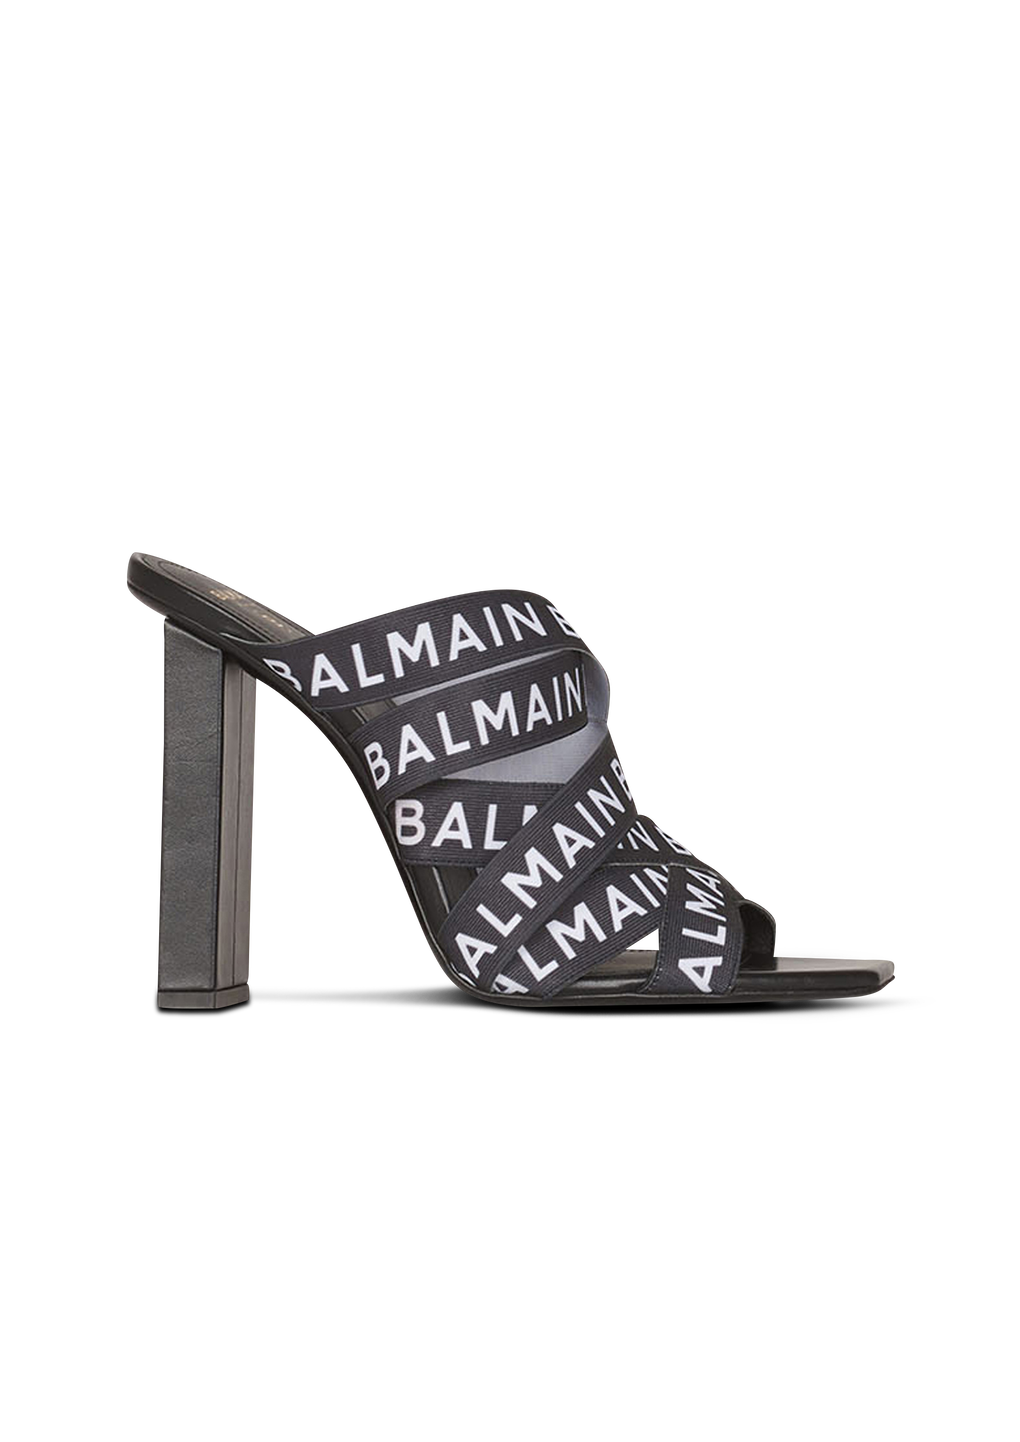 Sandali Union con logo Balmain, nero, hi-res